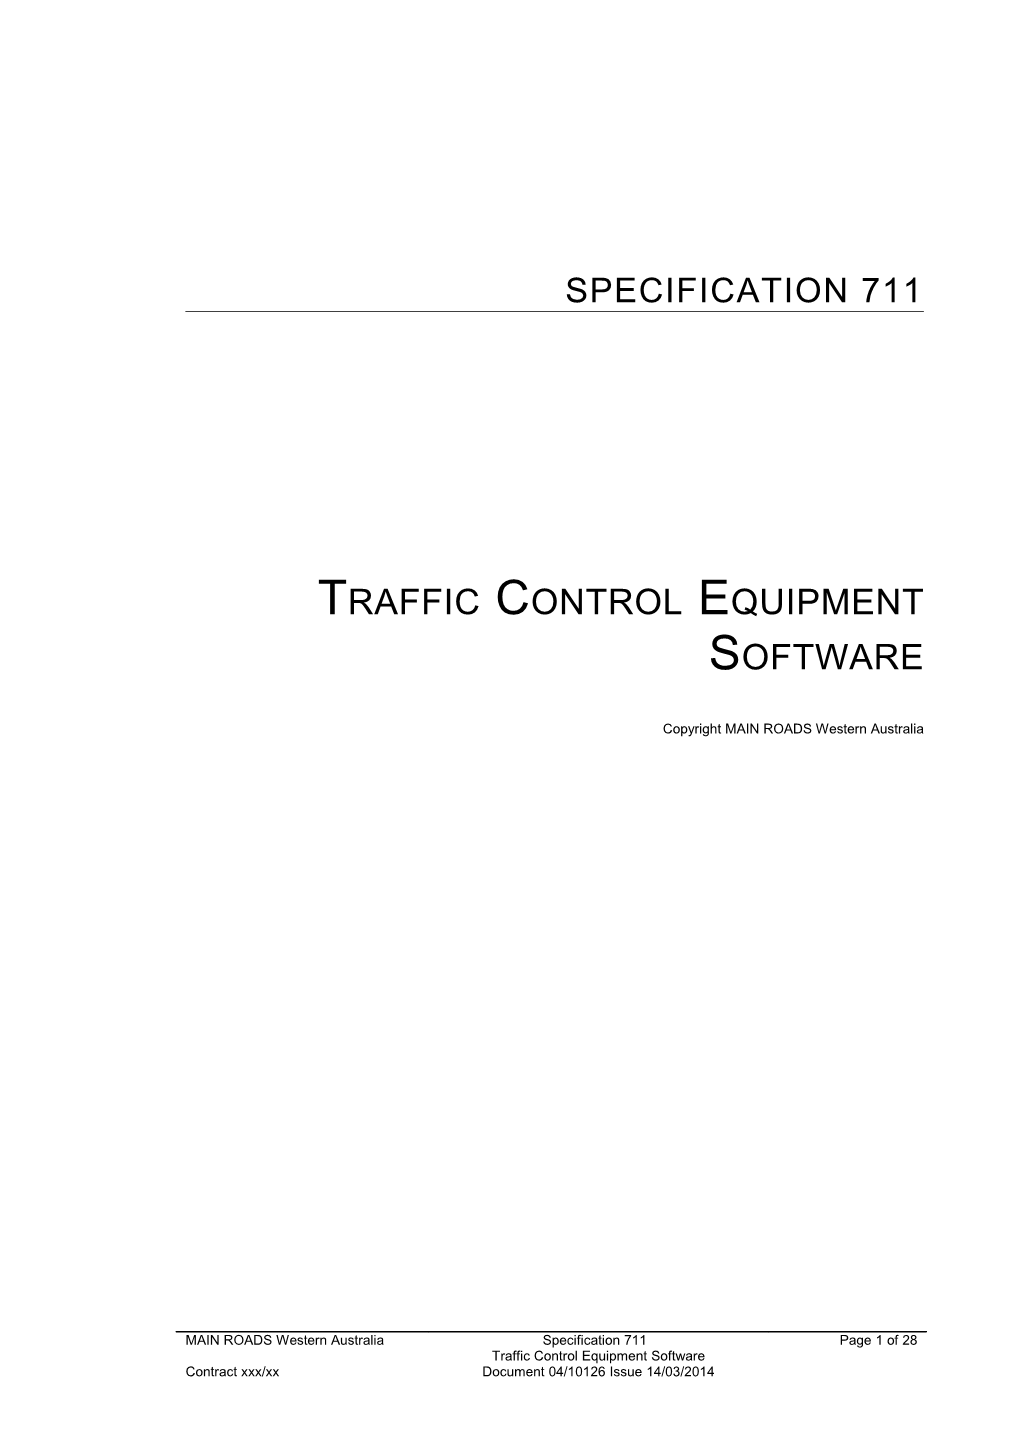 Traffic Control Equipment Software